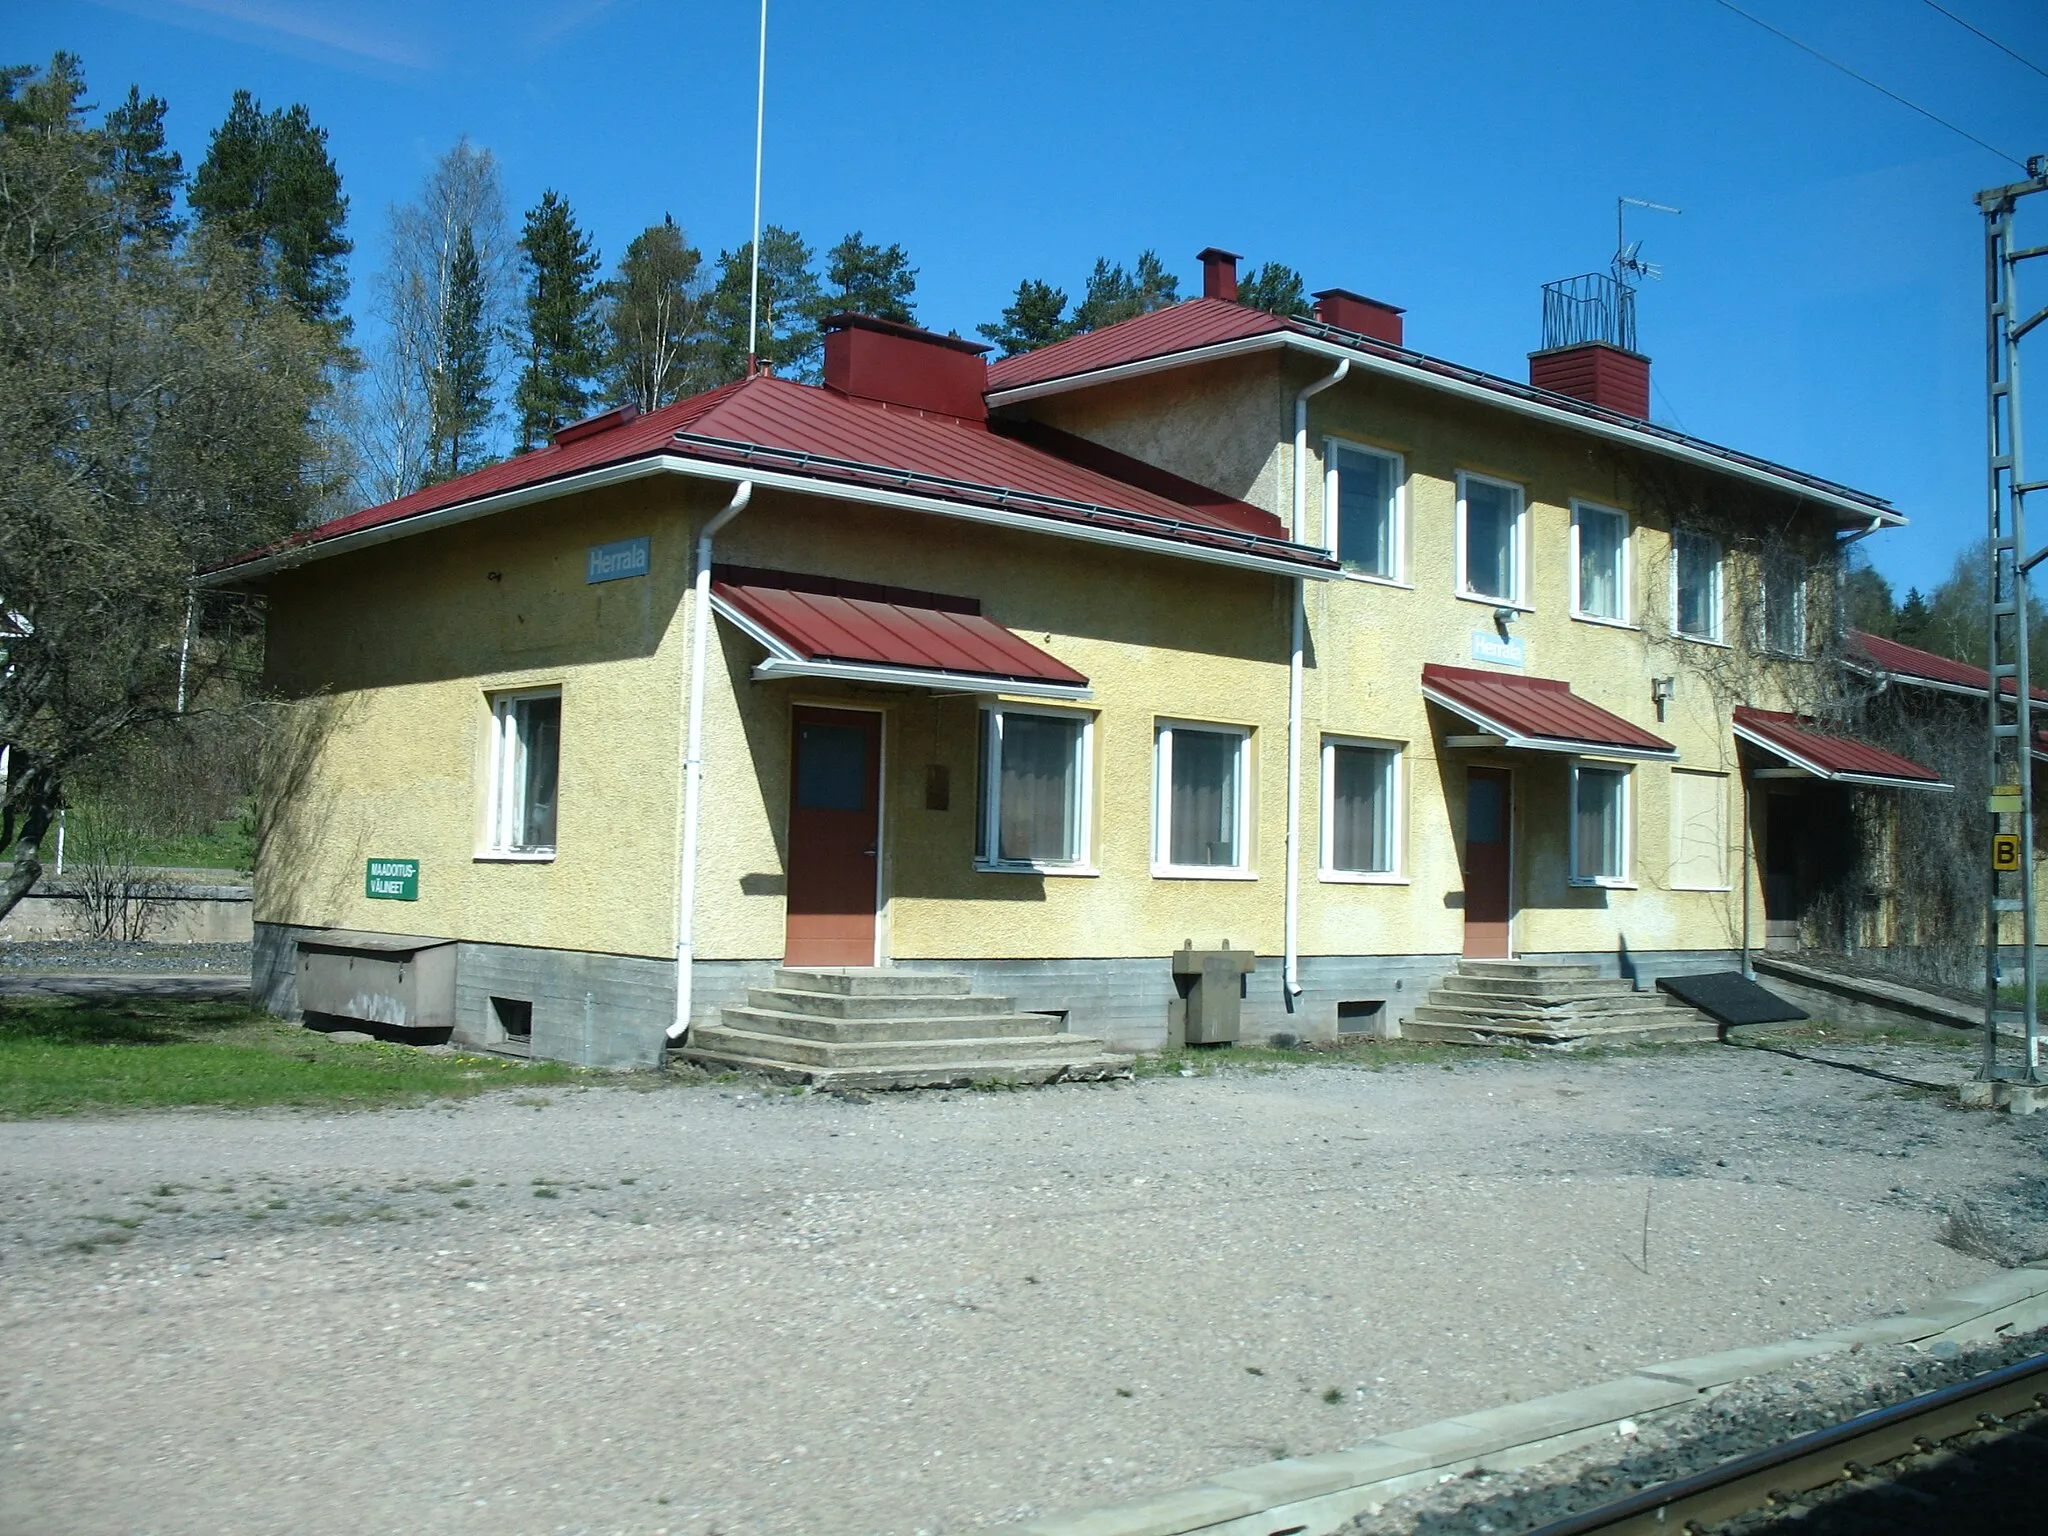 Photo showing: Herrala railway station in Hollola, Finland